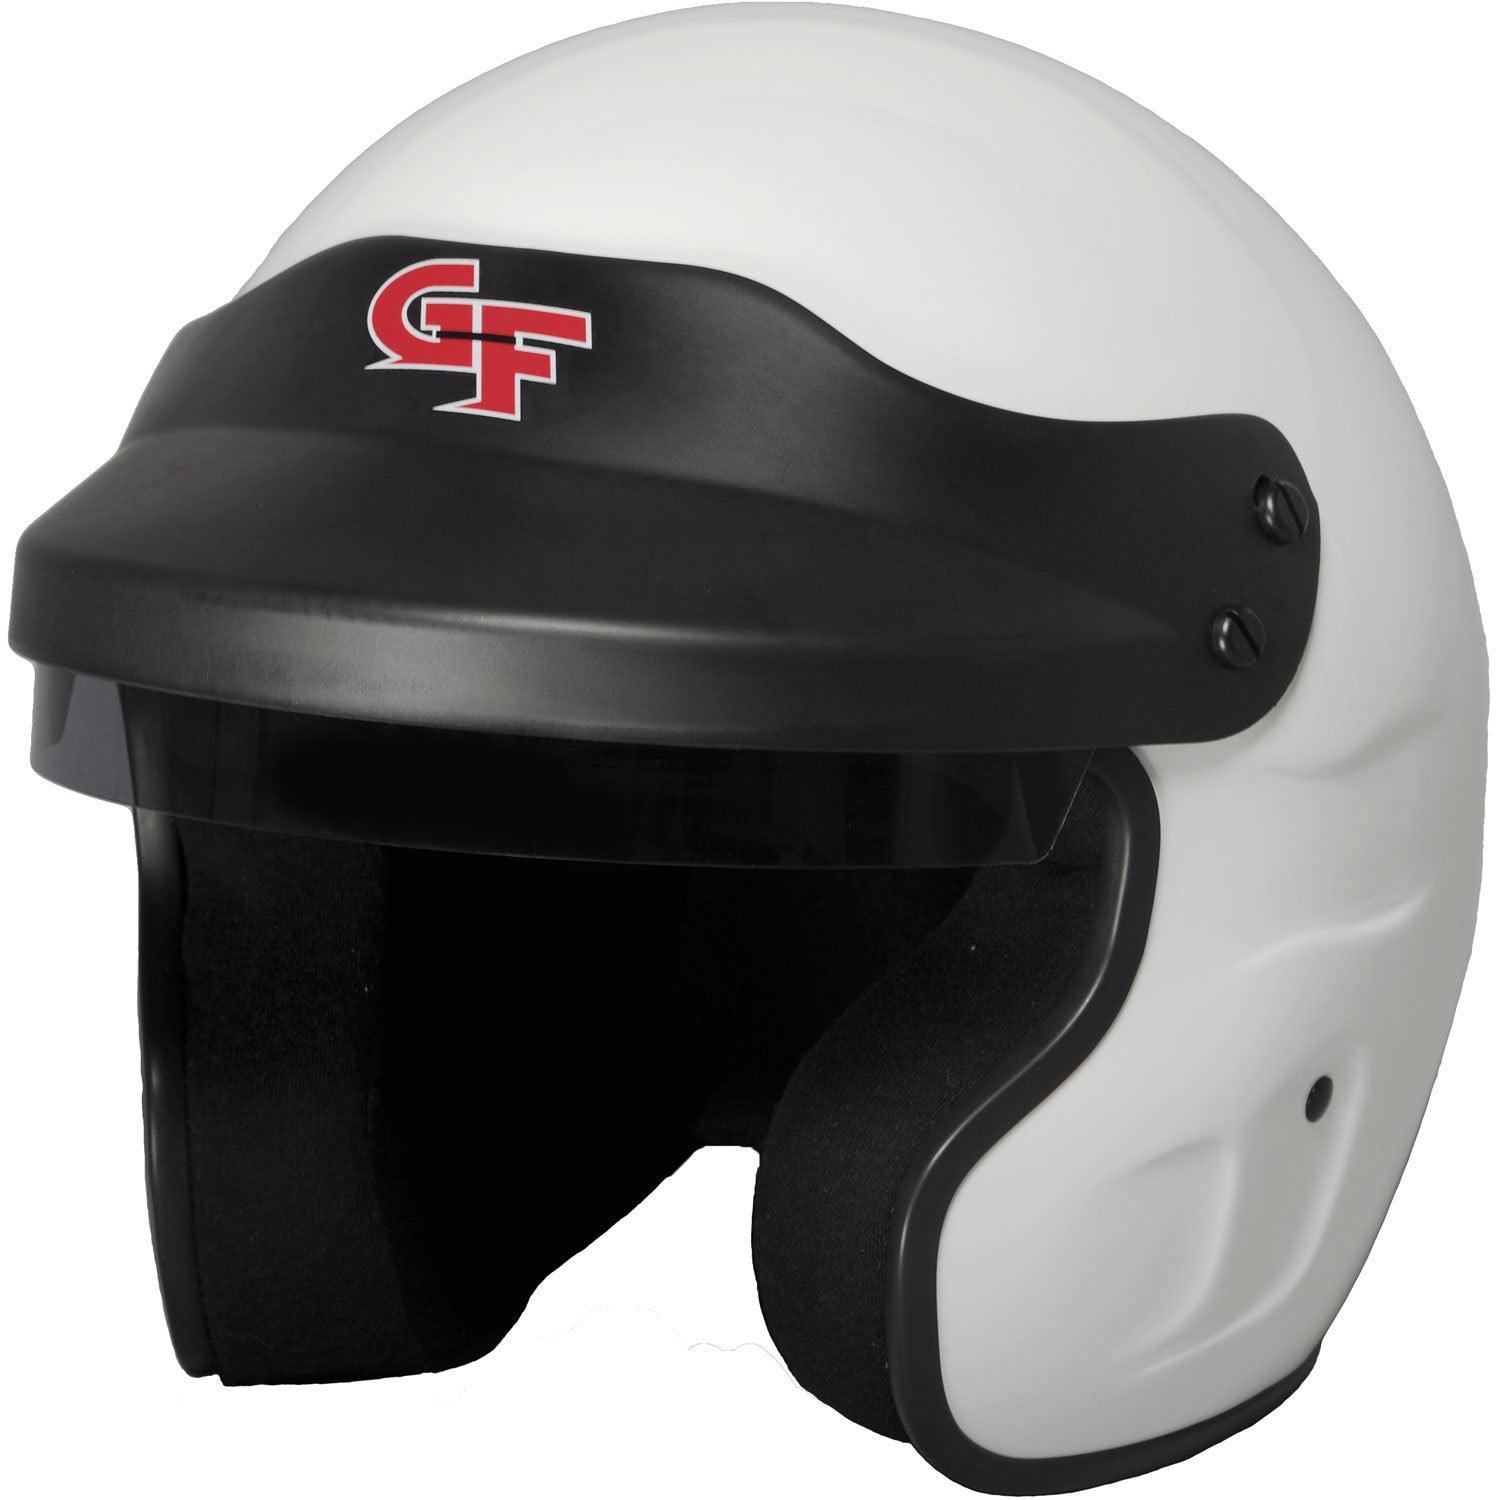 Helmet GF1 Open Medium White SA2020 - Burlile Performance Products